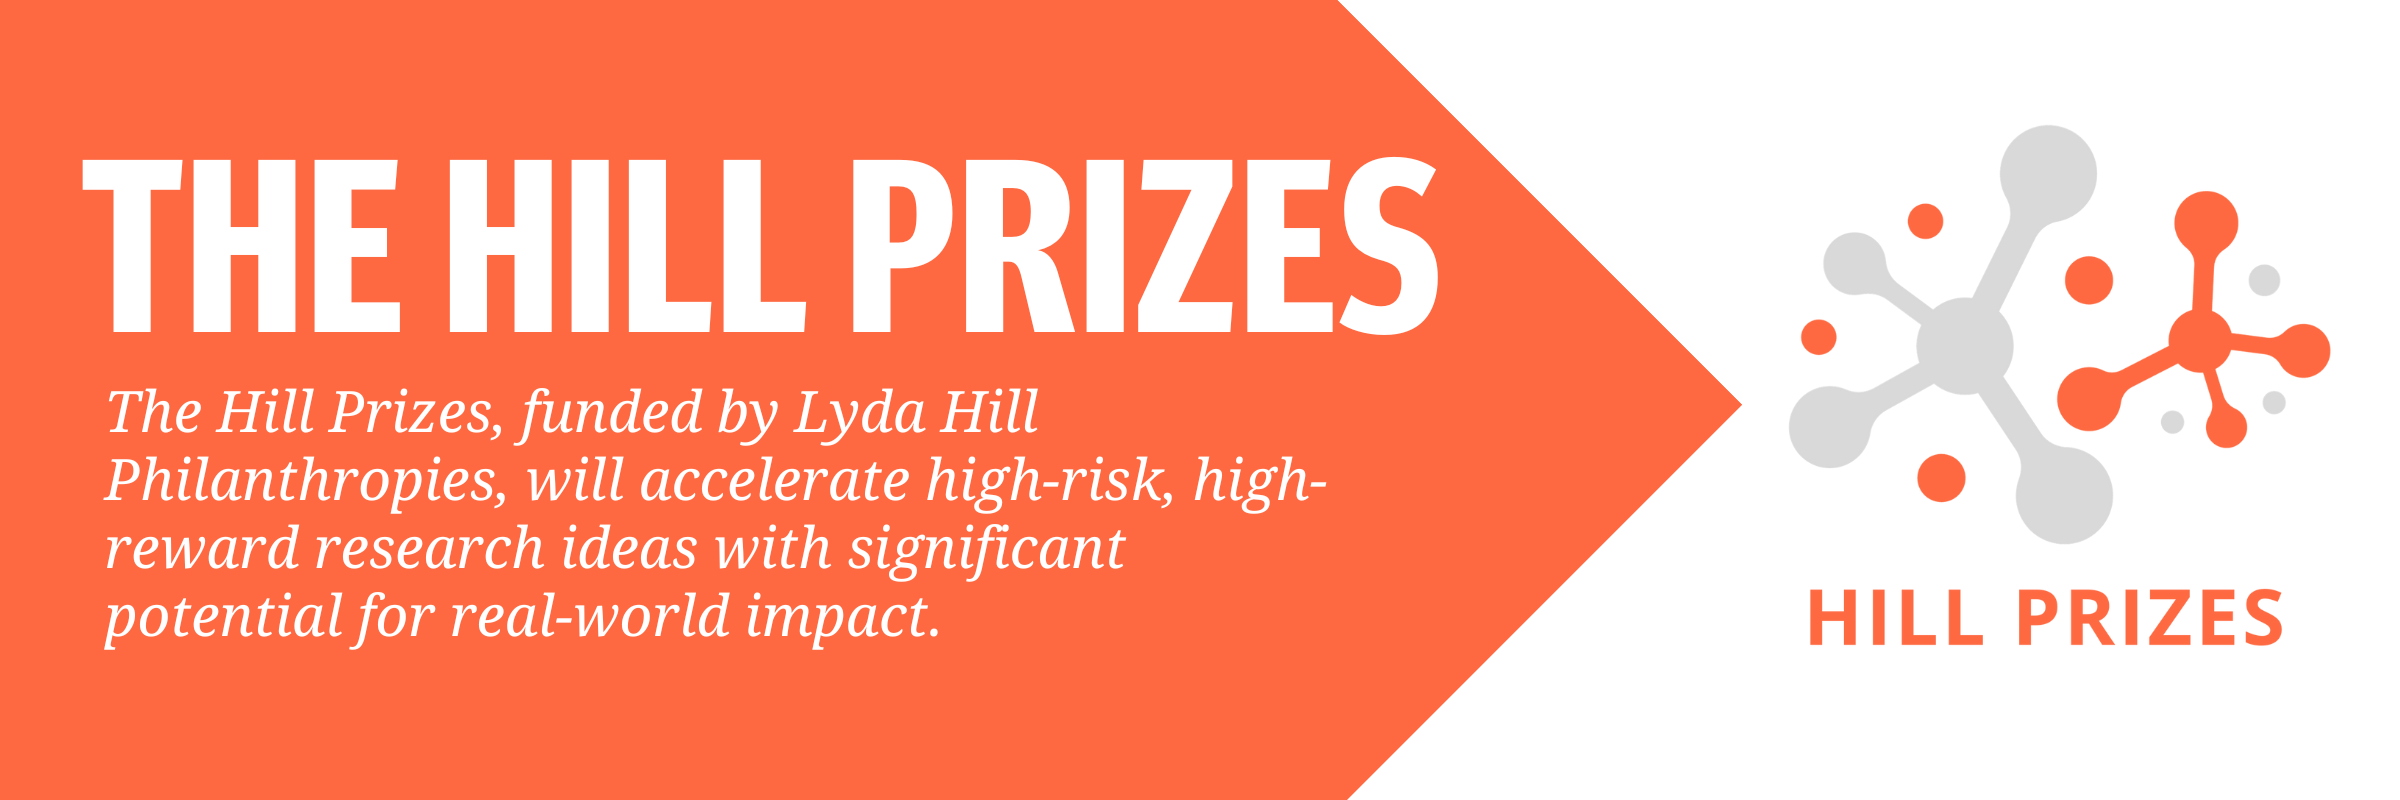 Hill Prizes Header